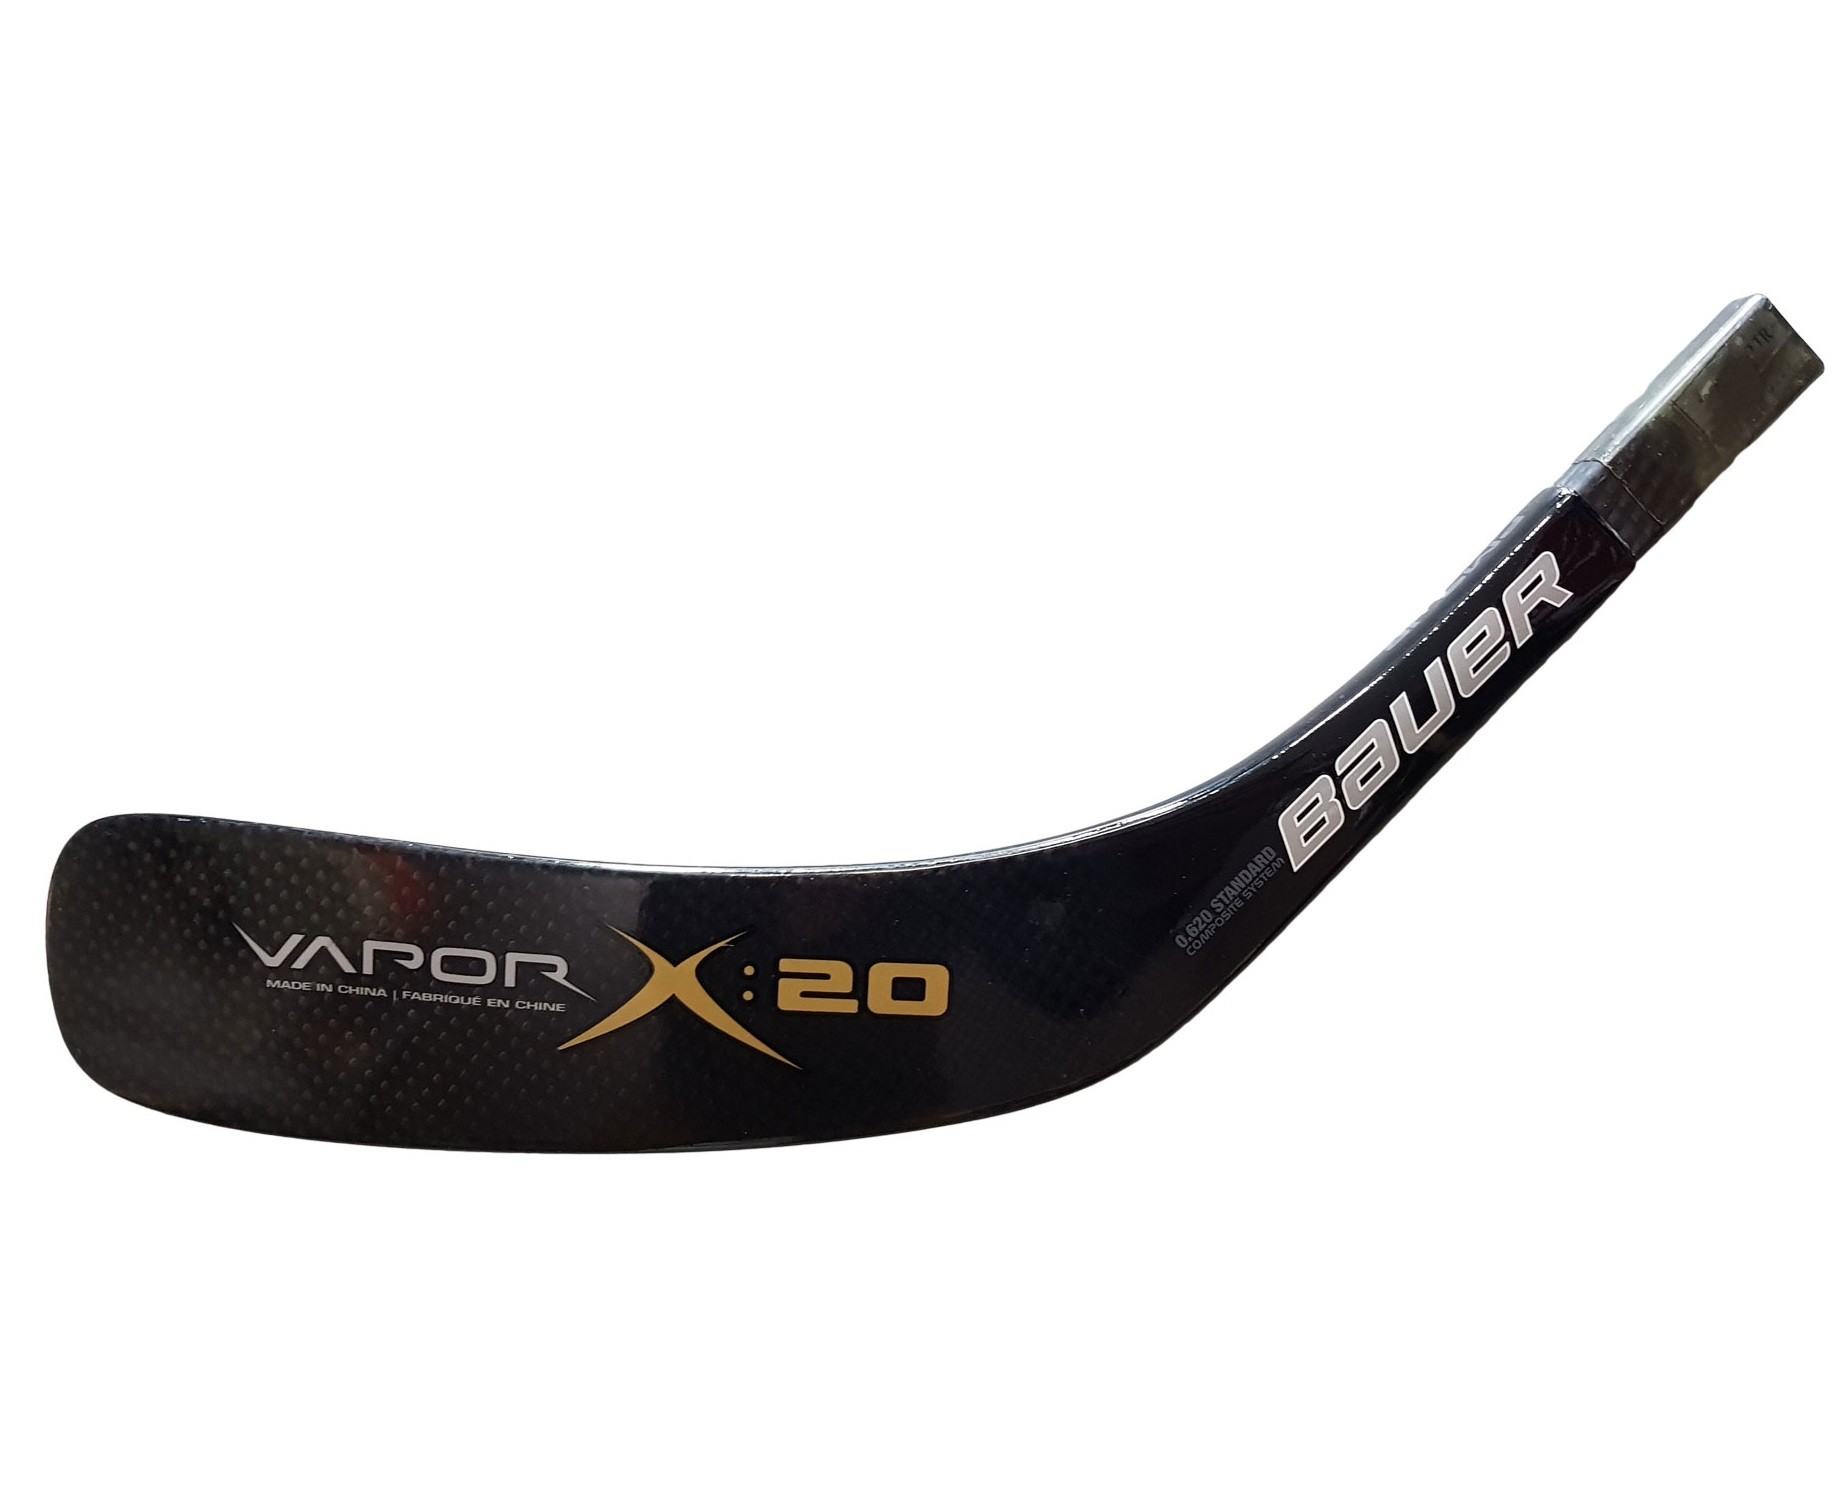 Bauer Vapor X:20 Jr. Composite Хоккейный Крюк